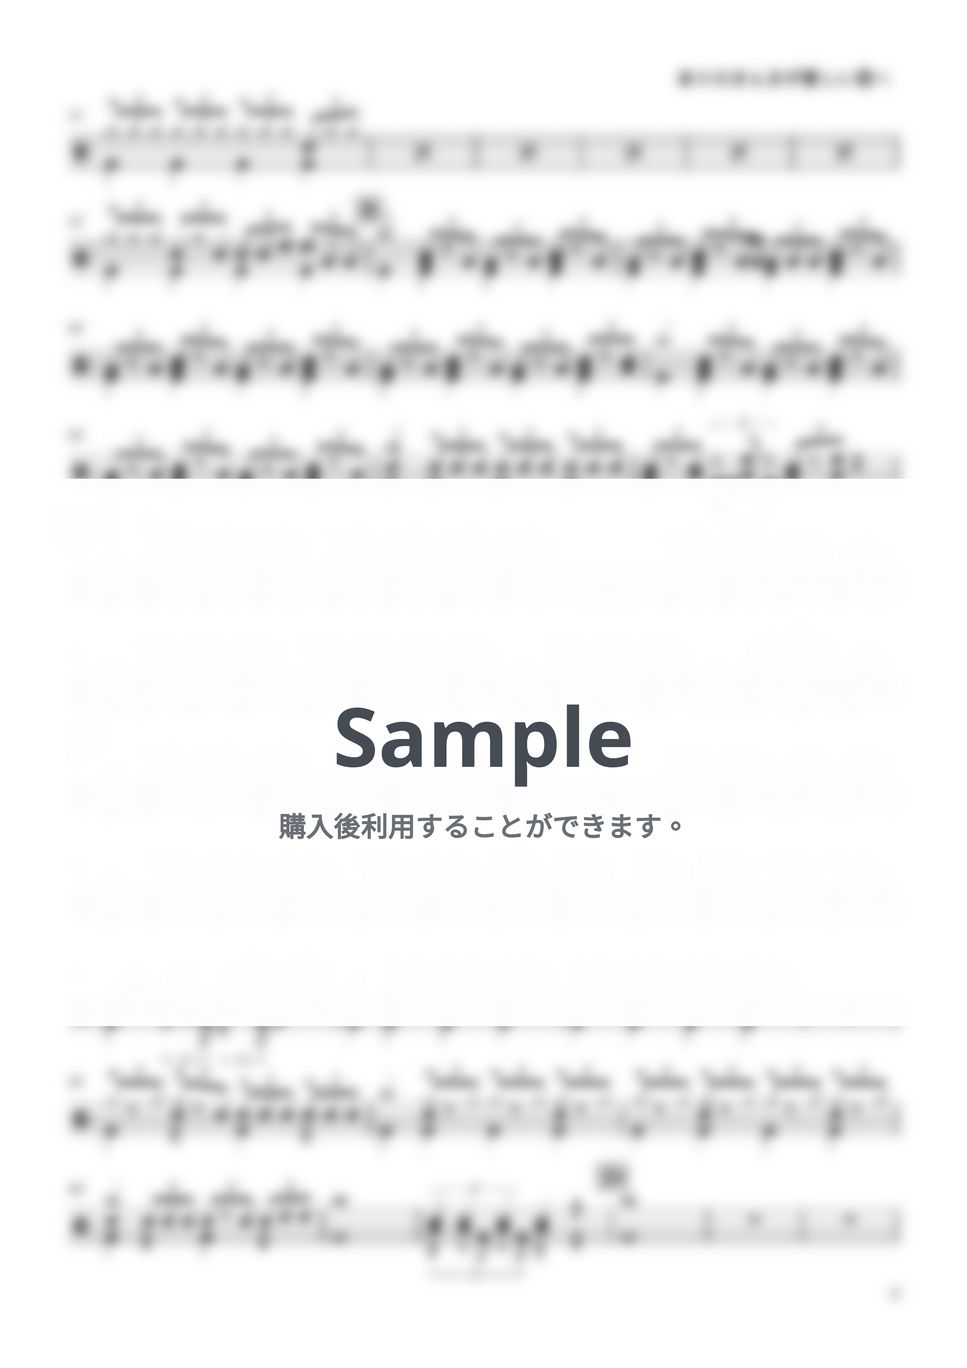 DISH// - ありのまんまが愛しい君へ (ドラム譜) by Drummie.i